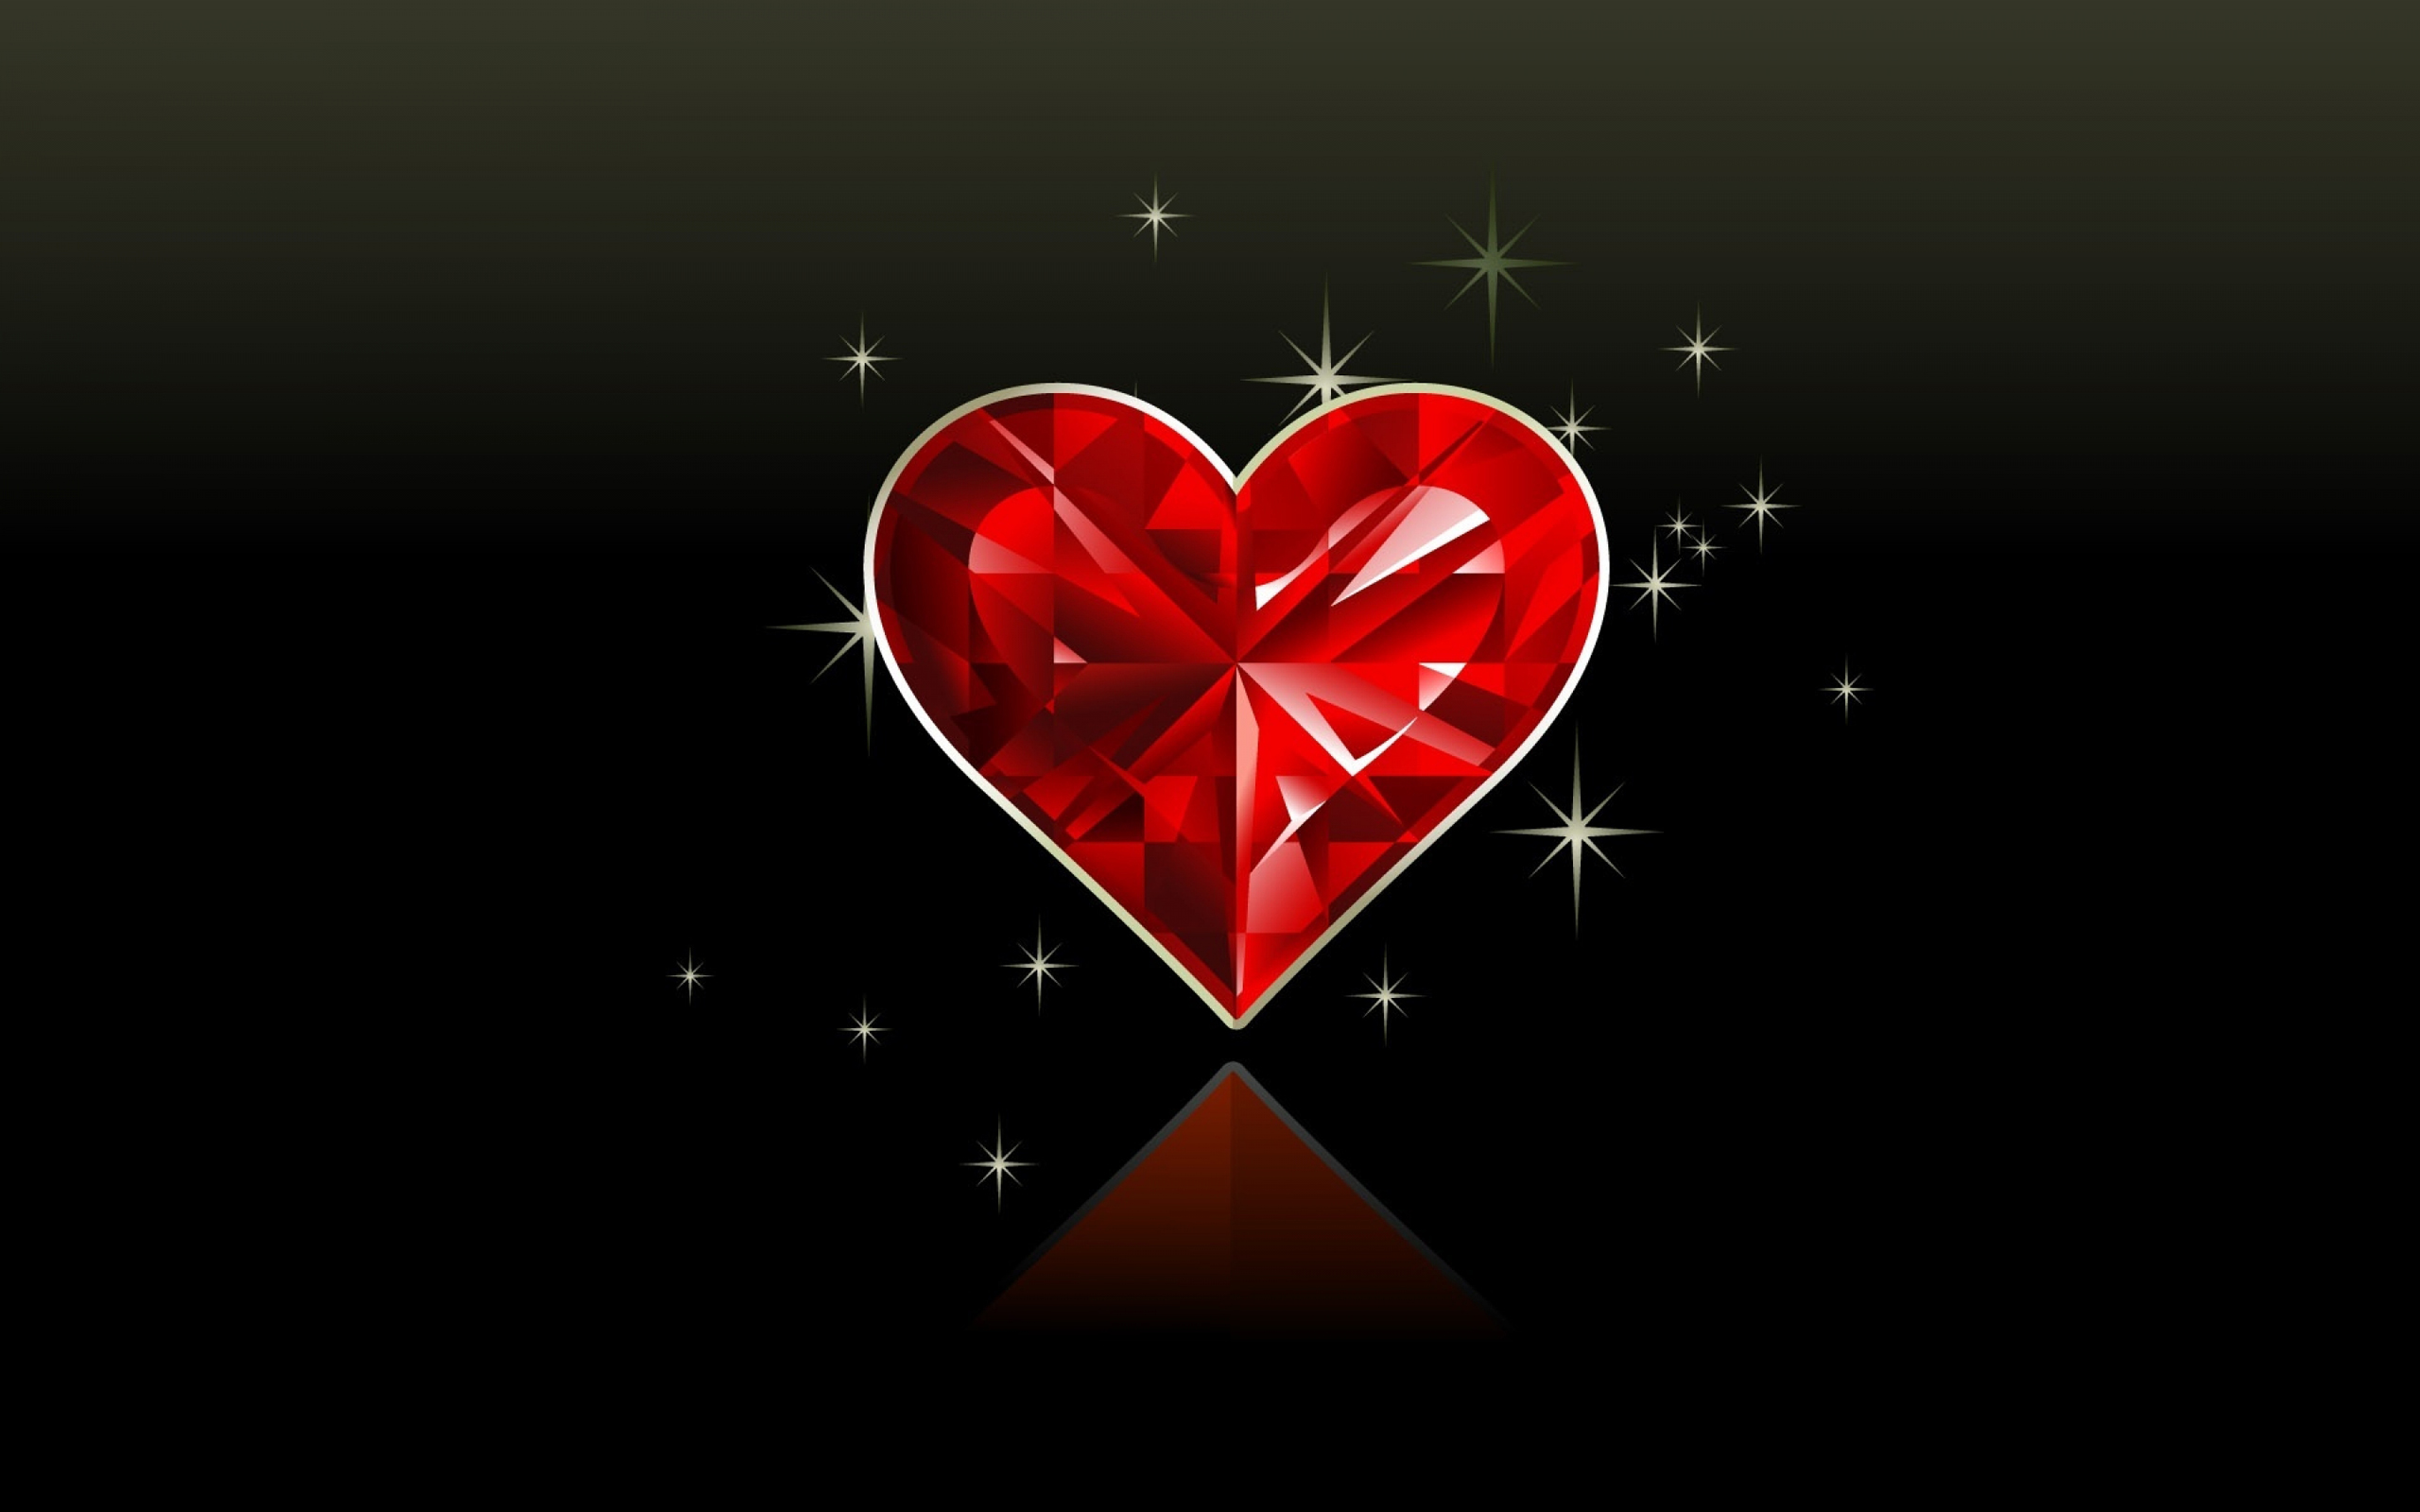 Diamond Hearts Live Wallpaper Apk Download for Android- Latest version 1.5-  com.tppm.diamond.hearts.live.wallpaper